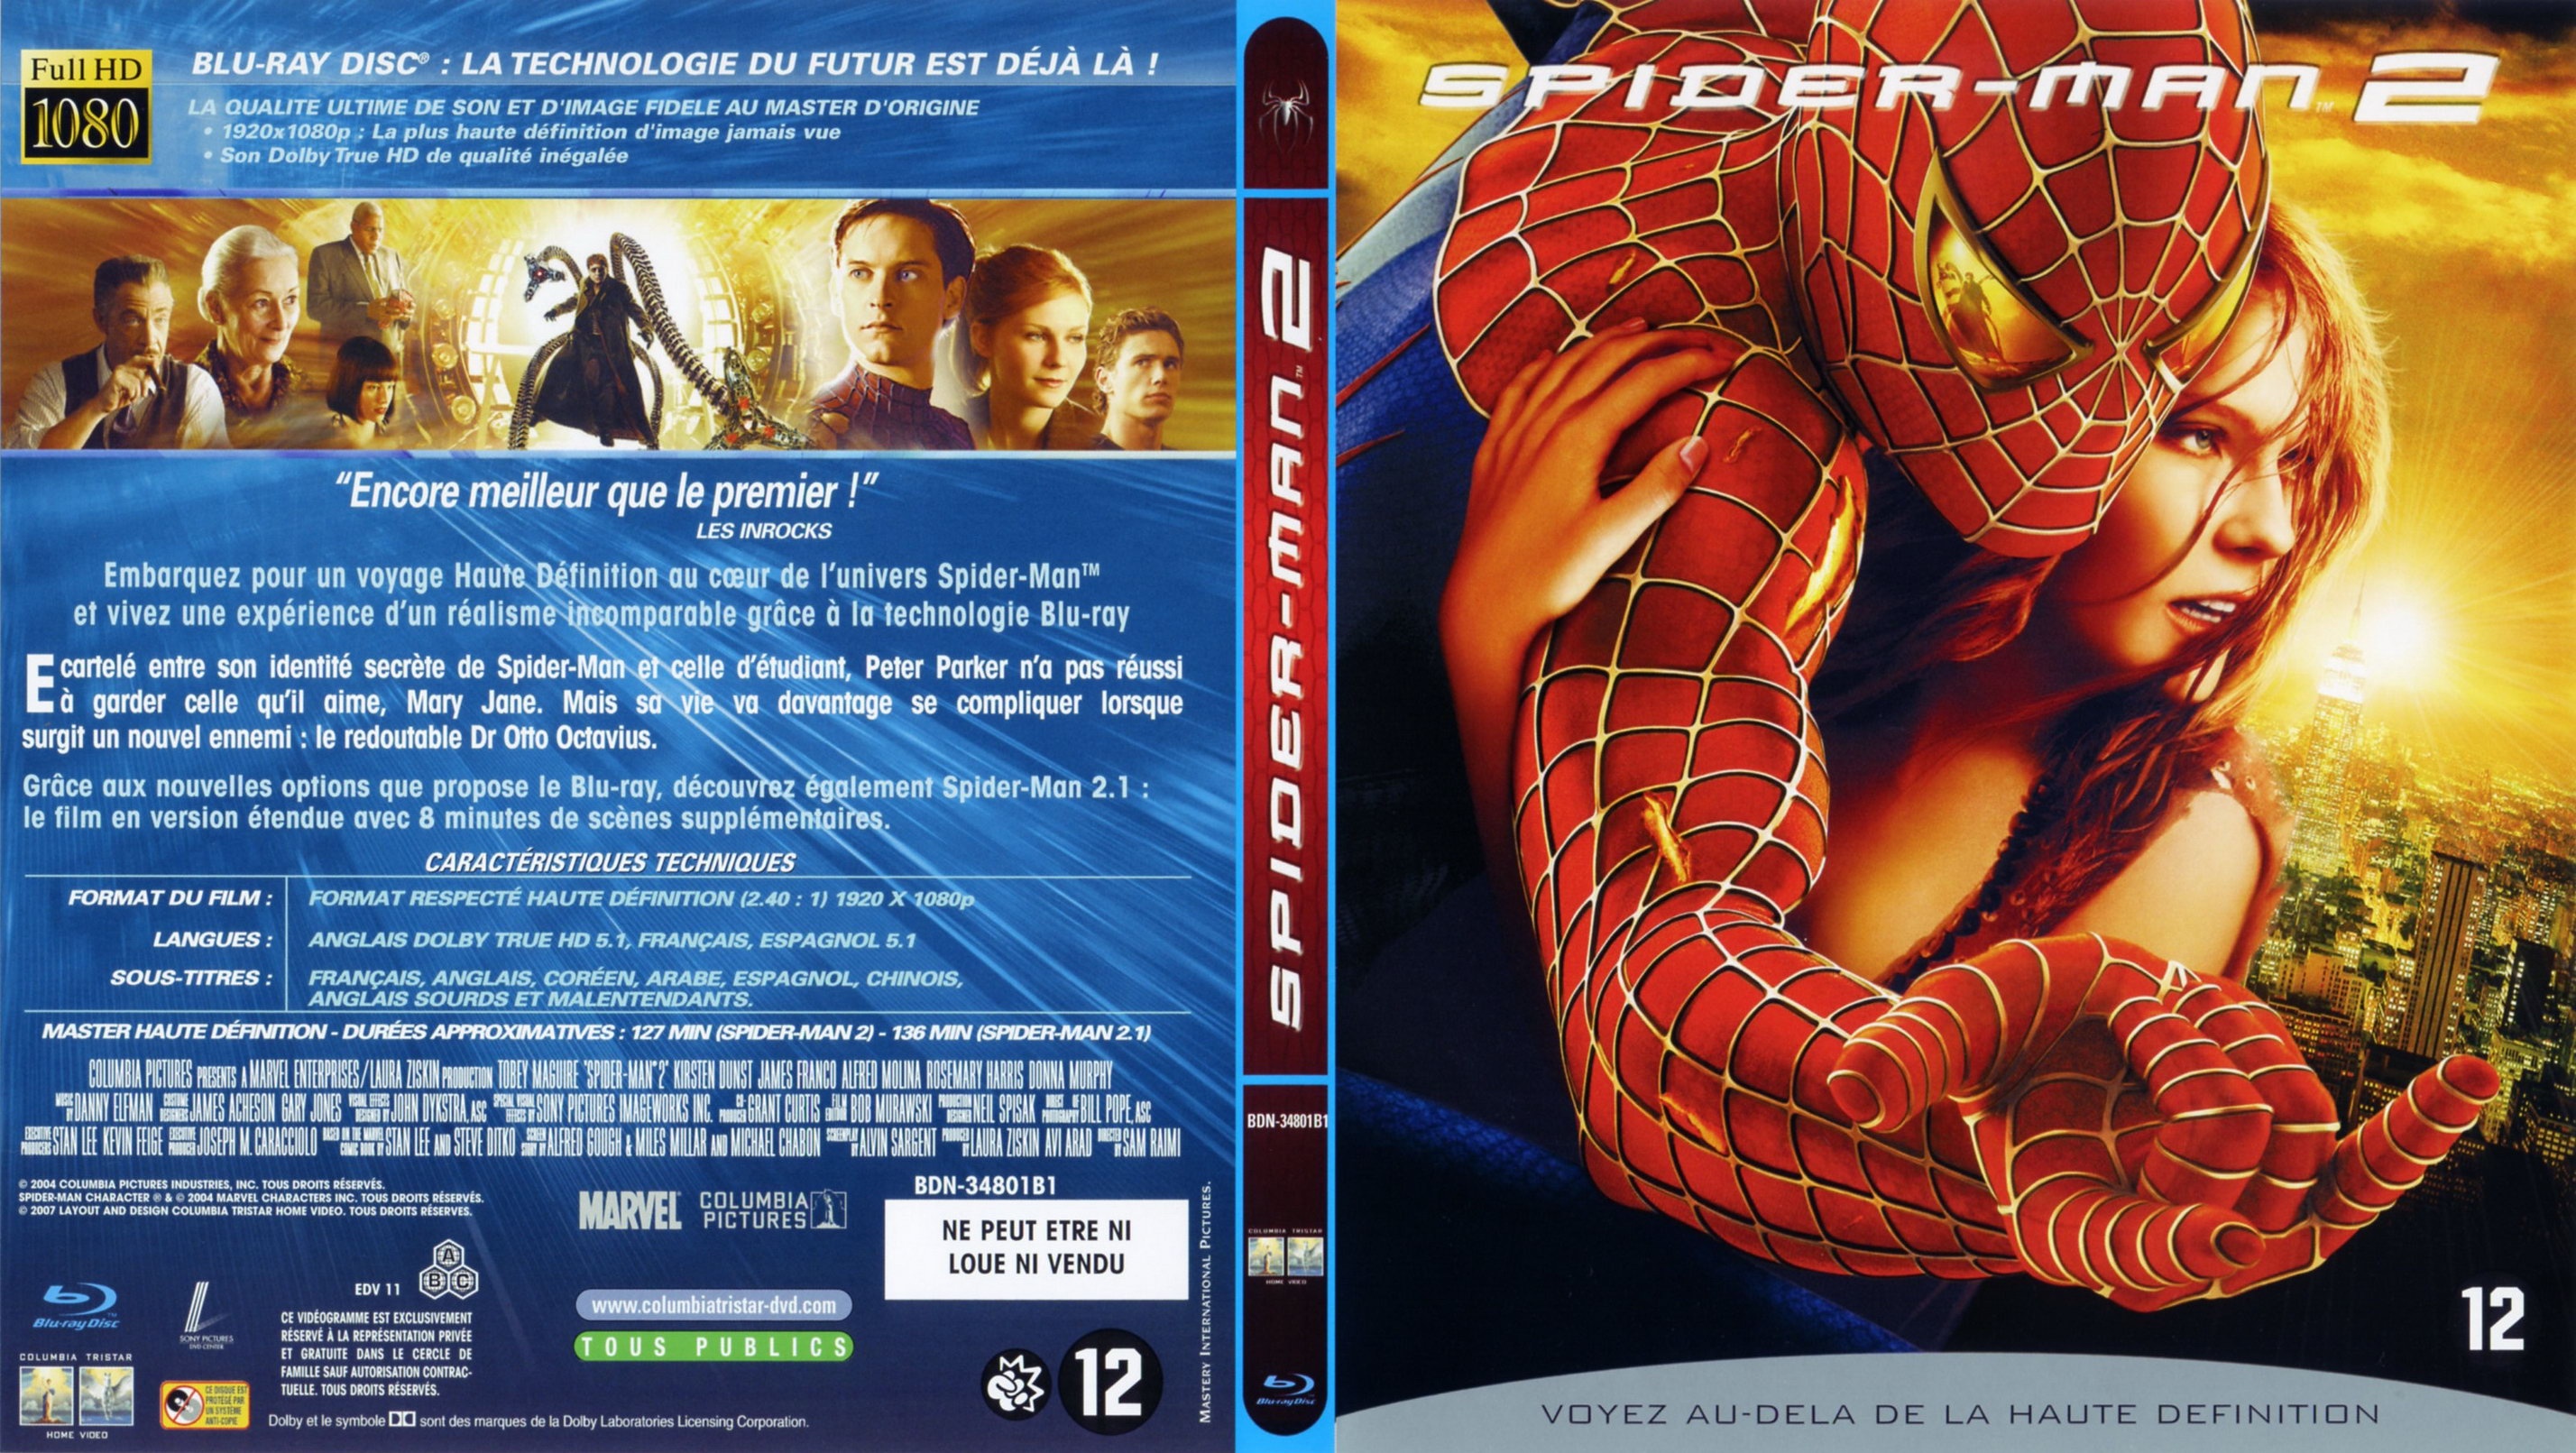 Jaquette Dvd De Spiderman 2 Blu Ray Cinéma Passion